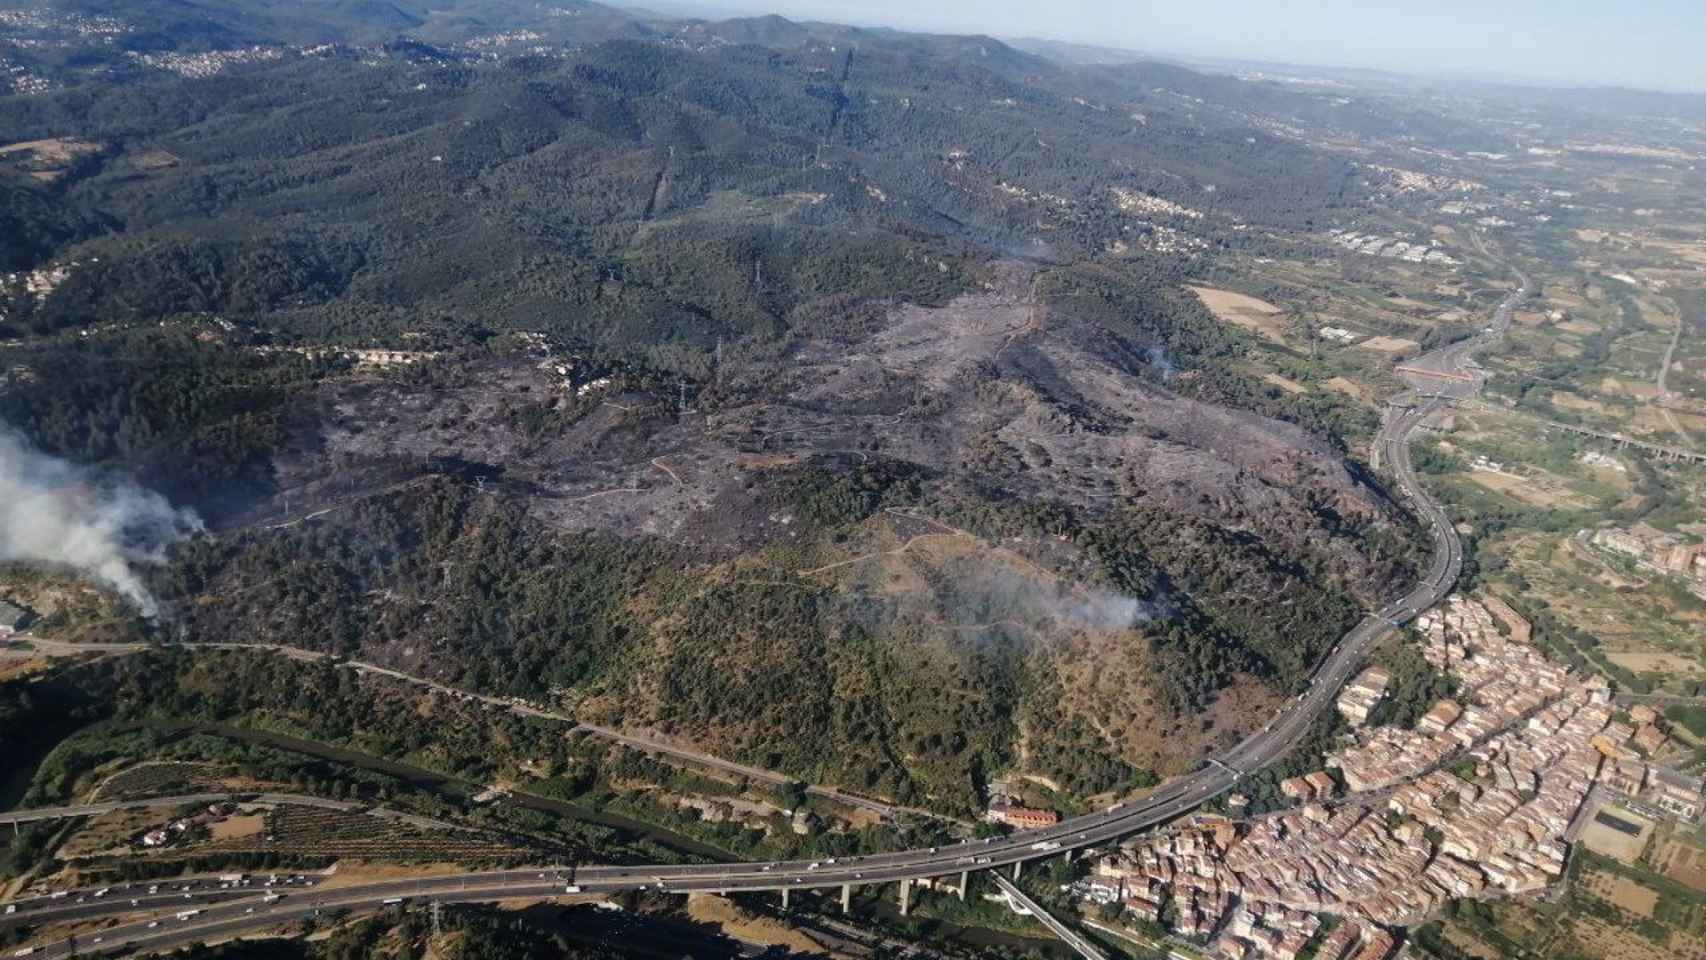 Incendio forestal en Castellví y Martorell (Barcelona) / BOMBERS